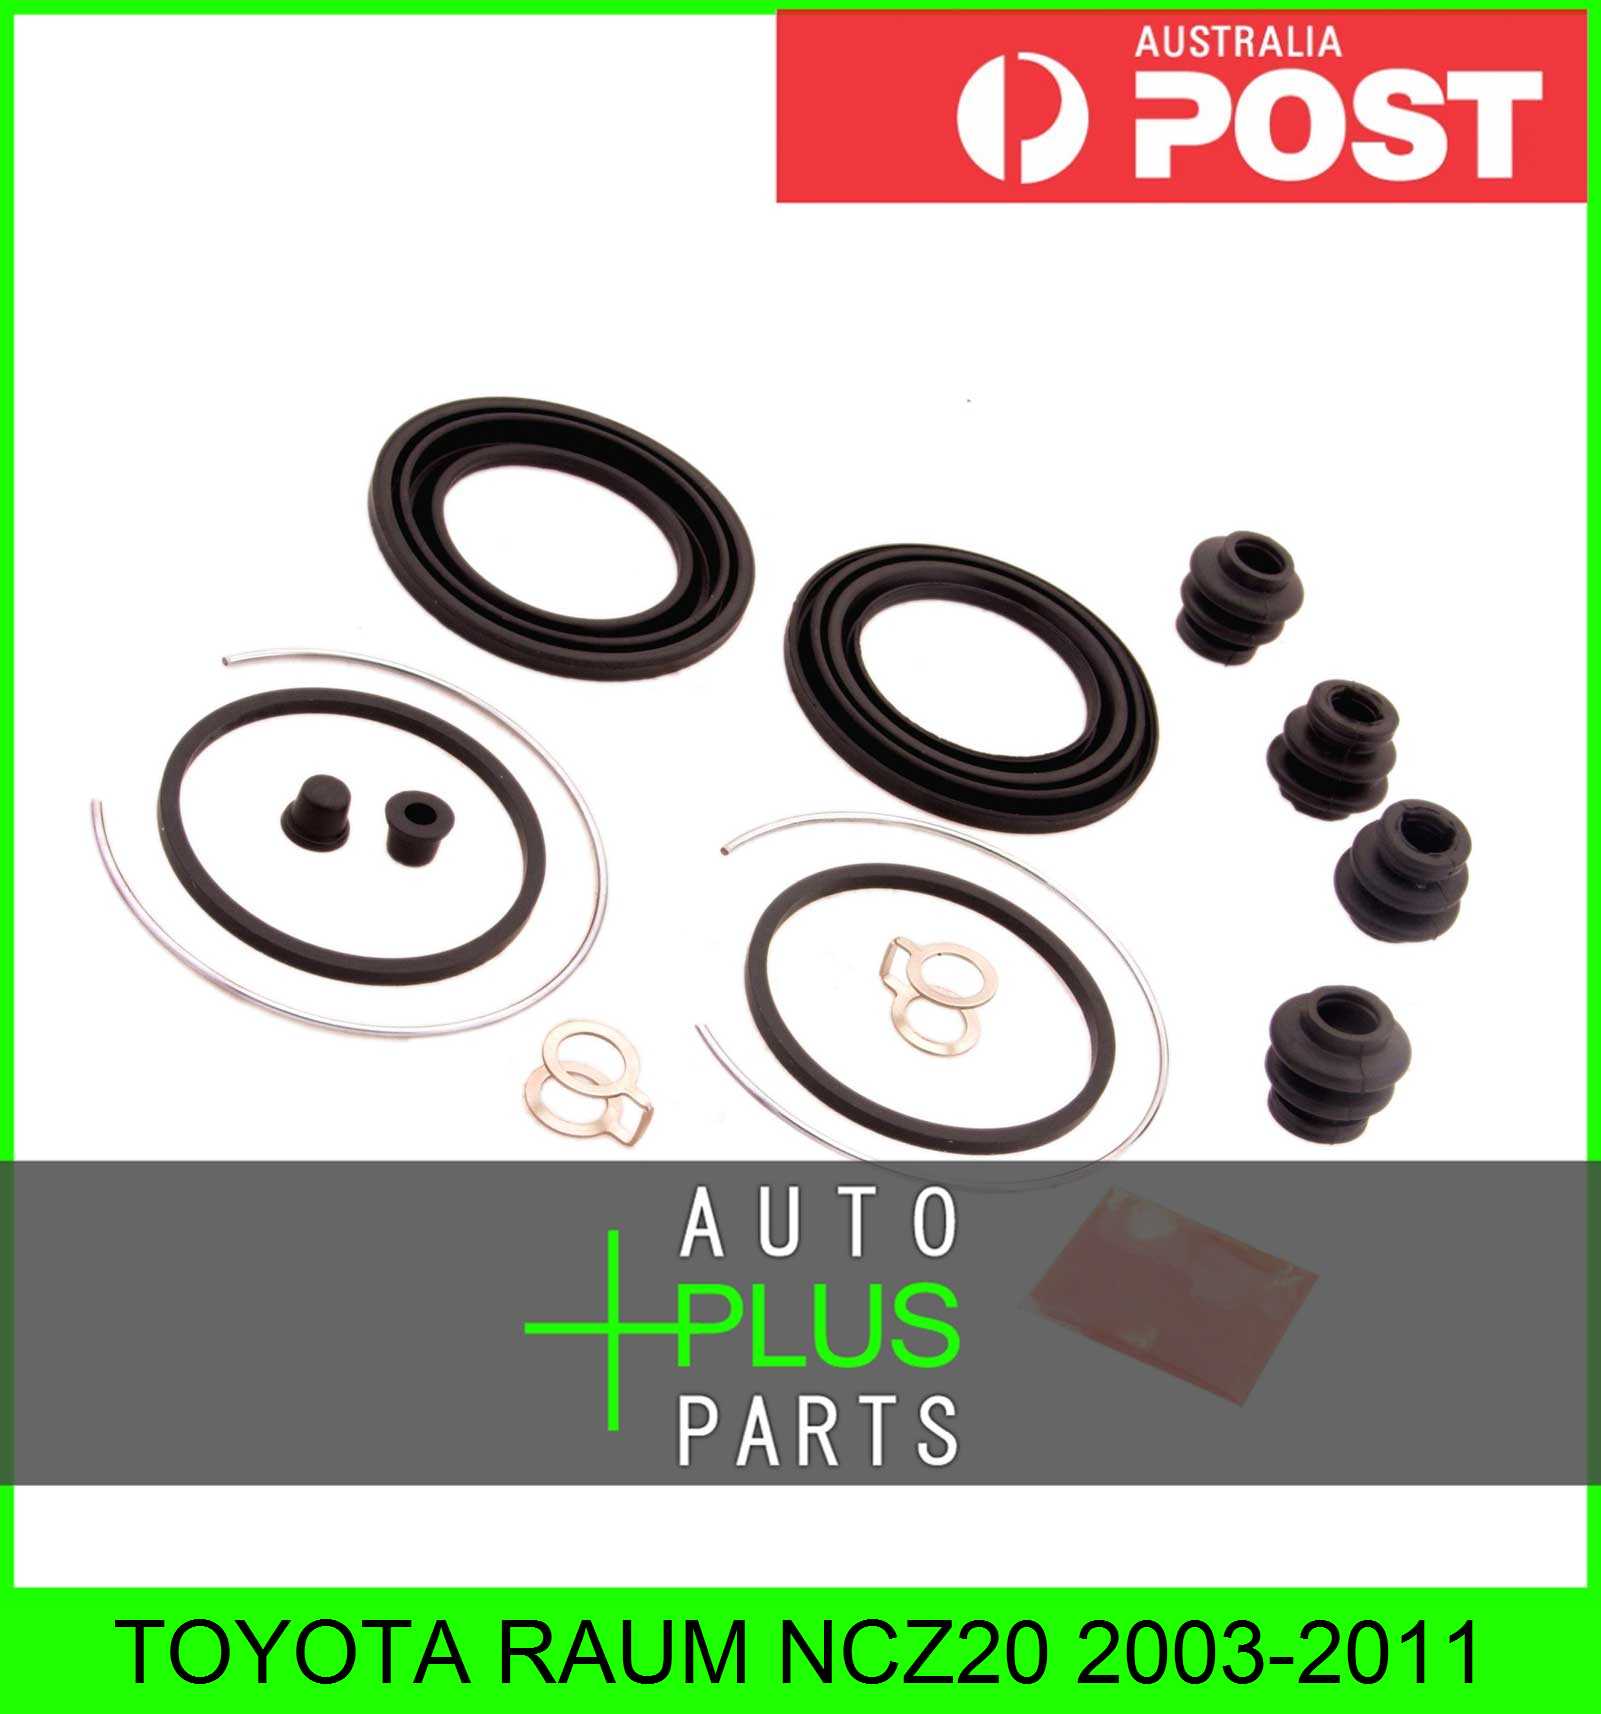 Fits TOYOTA RAUM NCZ20 Brake Caliper Cylinder Piston Seal Repair Kit Product Photo